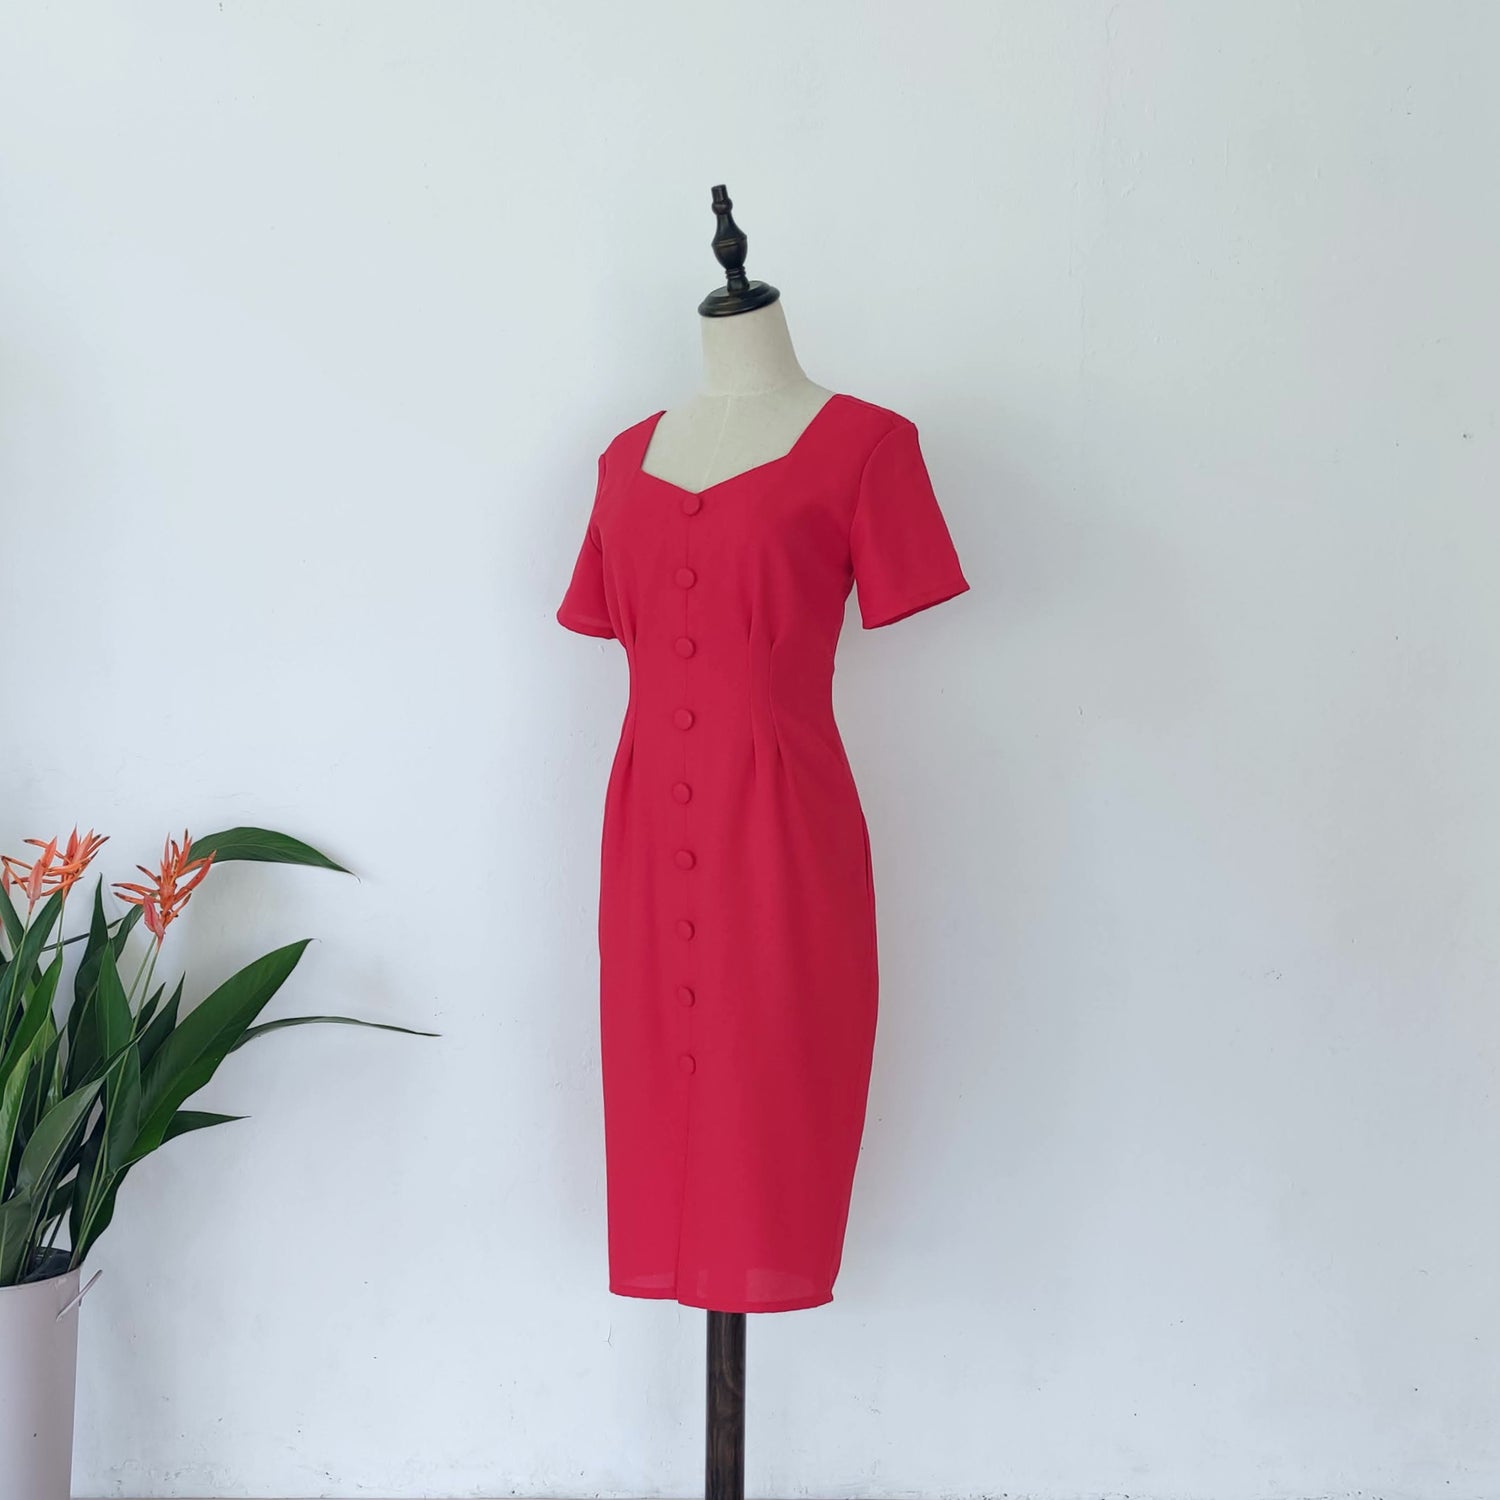 sweetheart neckline pencil dress | red | posh affaires